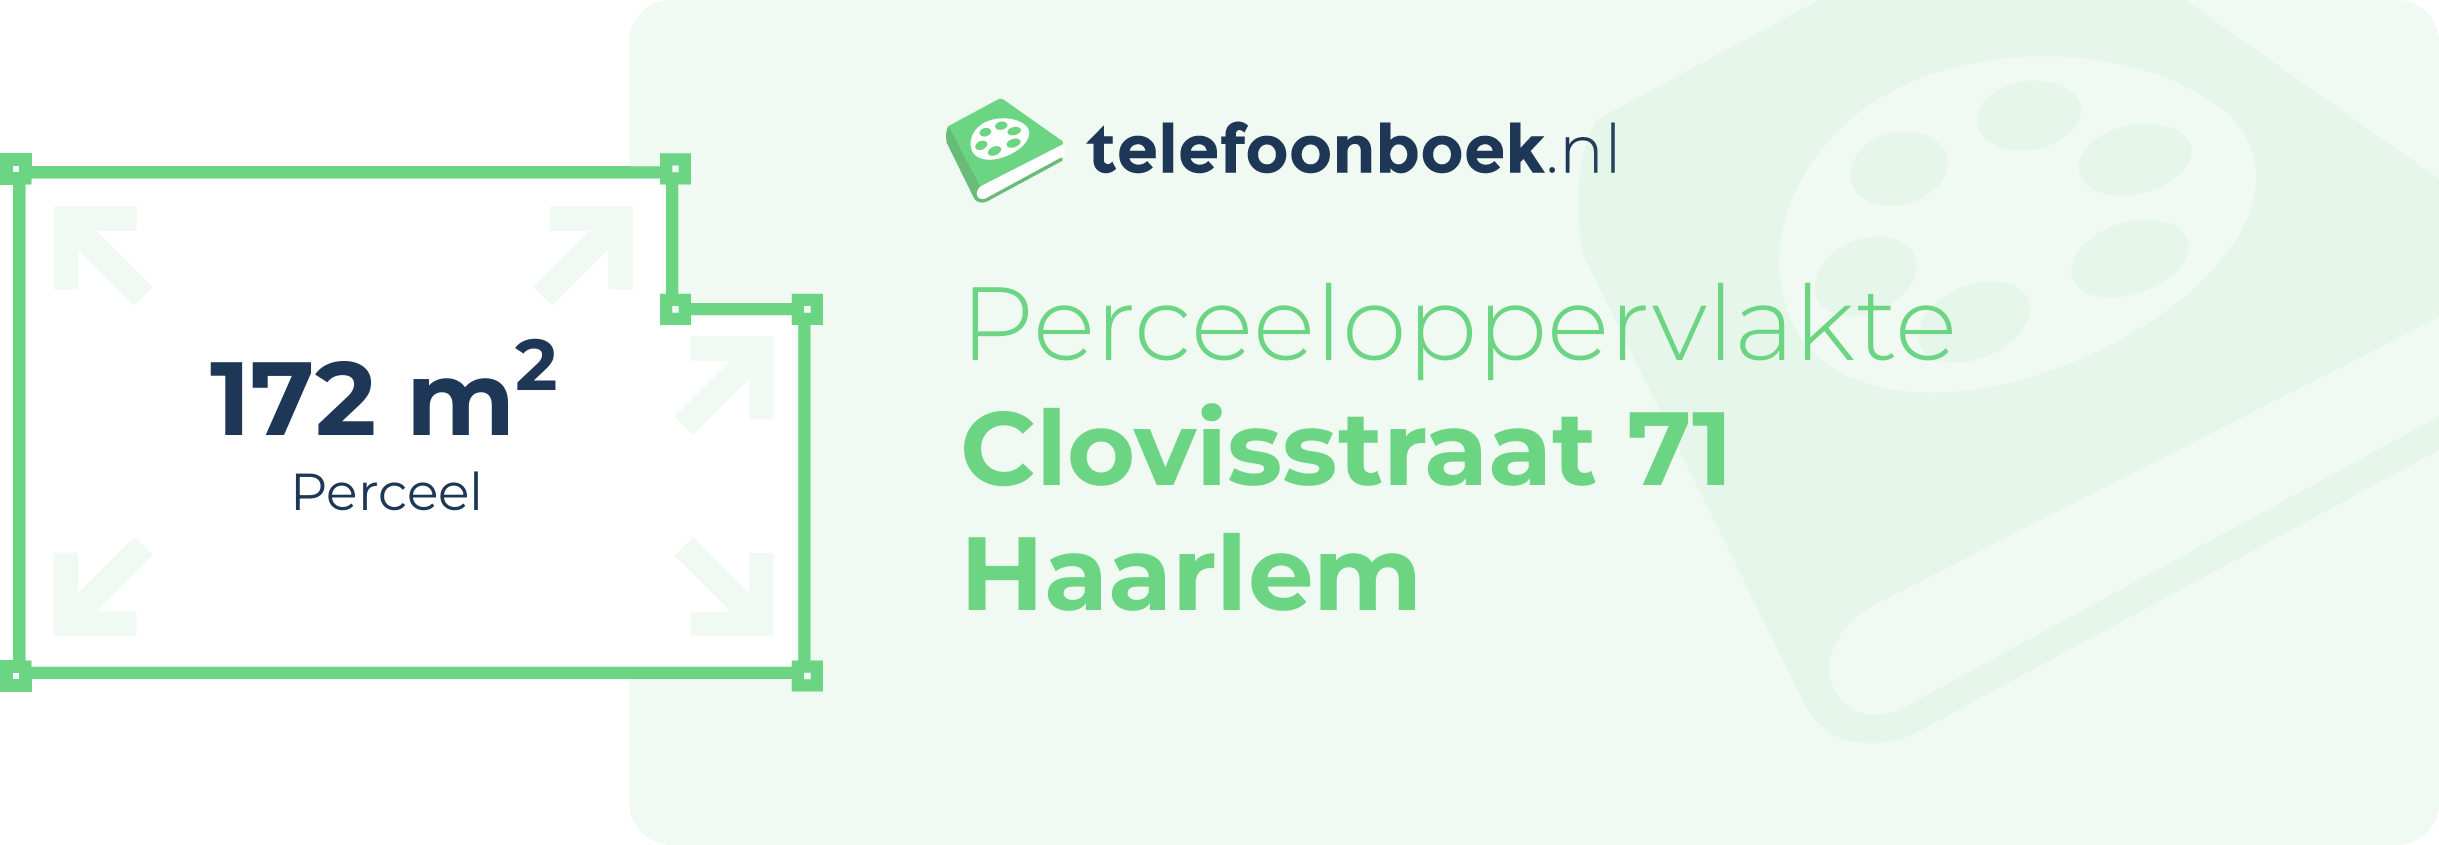 Perceeloppervlakte Clovisstraat 71 Haarlem